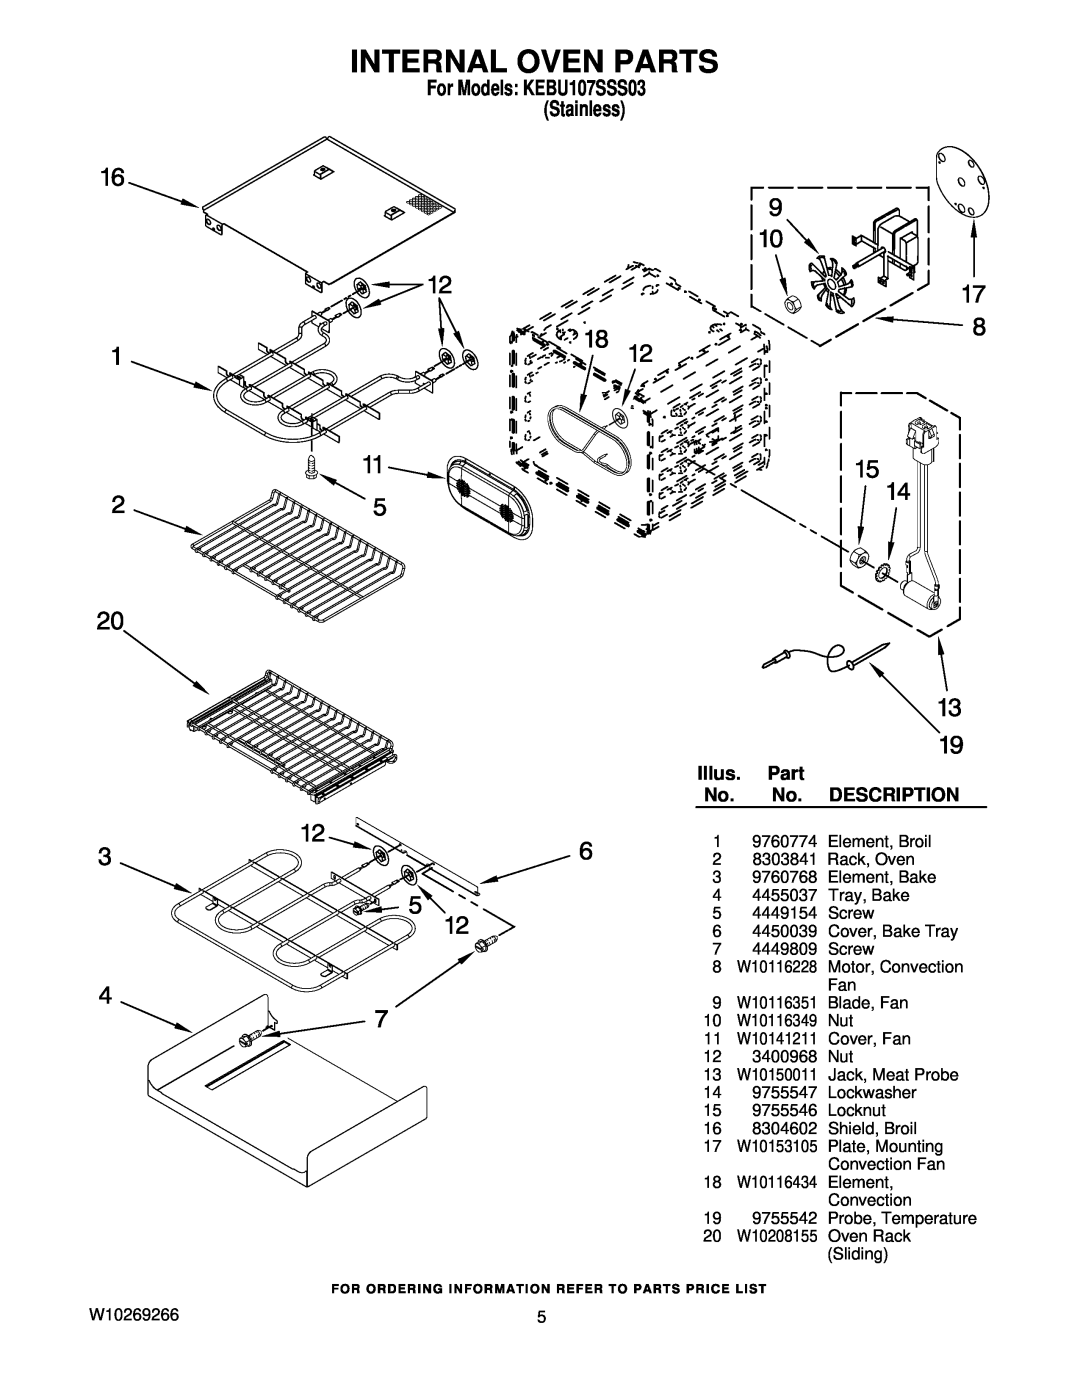 KitchenAid KEBU107SSS03 manual Internal Oven Parts, Illus. Part, Description, W10116228, W10116351, W10116349, W10141211 